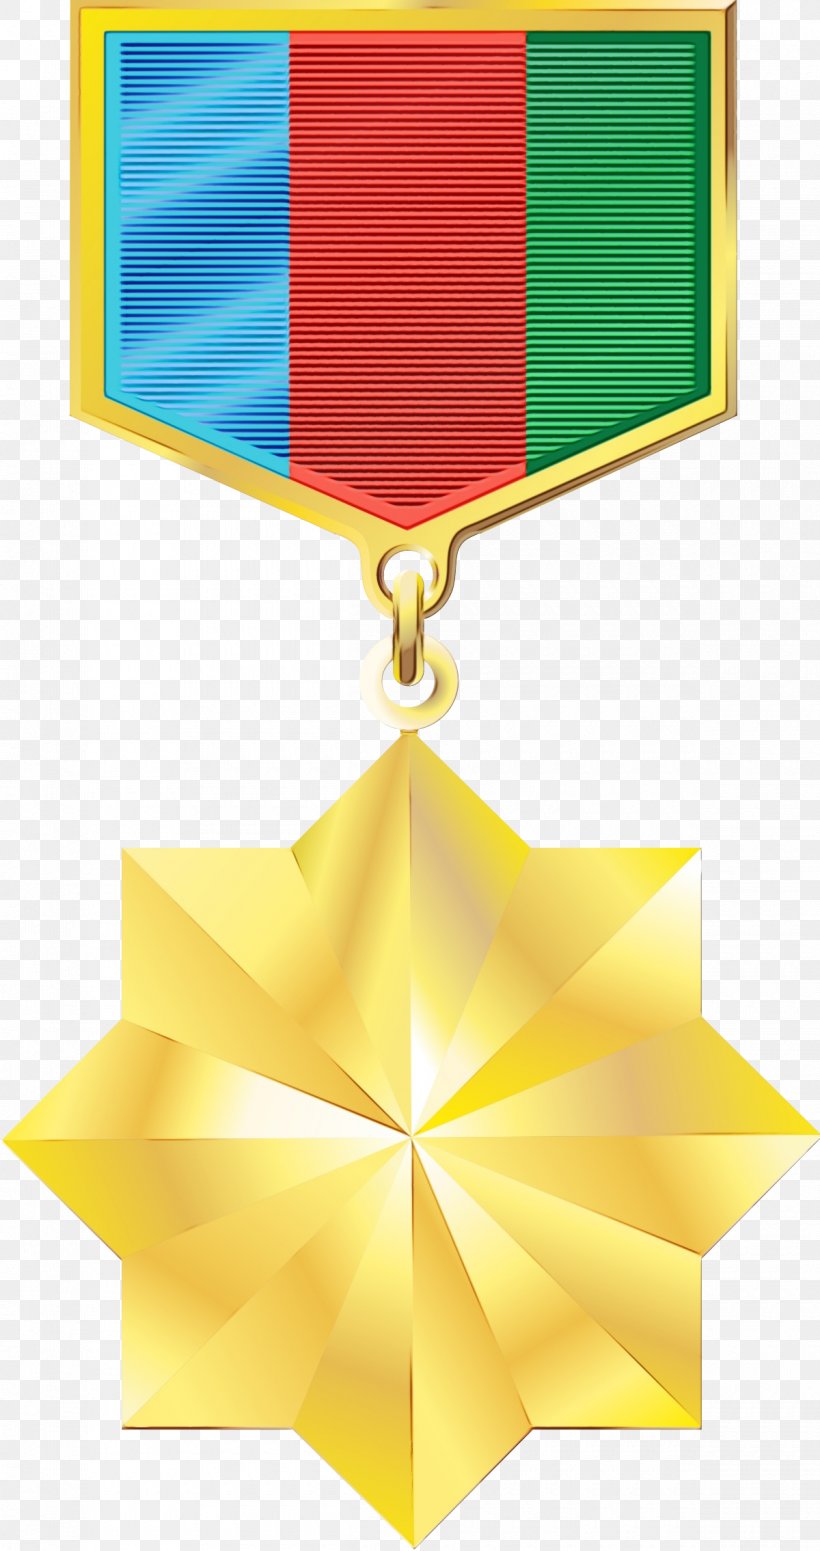 Azerbaijan Medal, PNG, 1200x2270px, Azerbaijan, May 22, Medal, National Hero Of Azerbaijan, National Symbols Of Azerbaijan Download Free